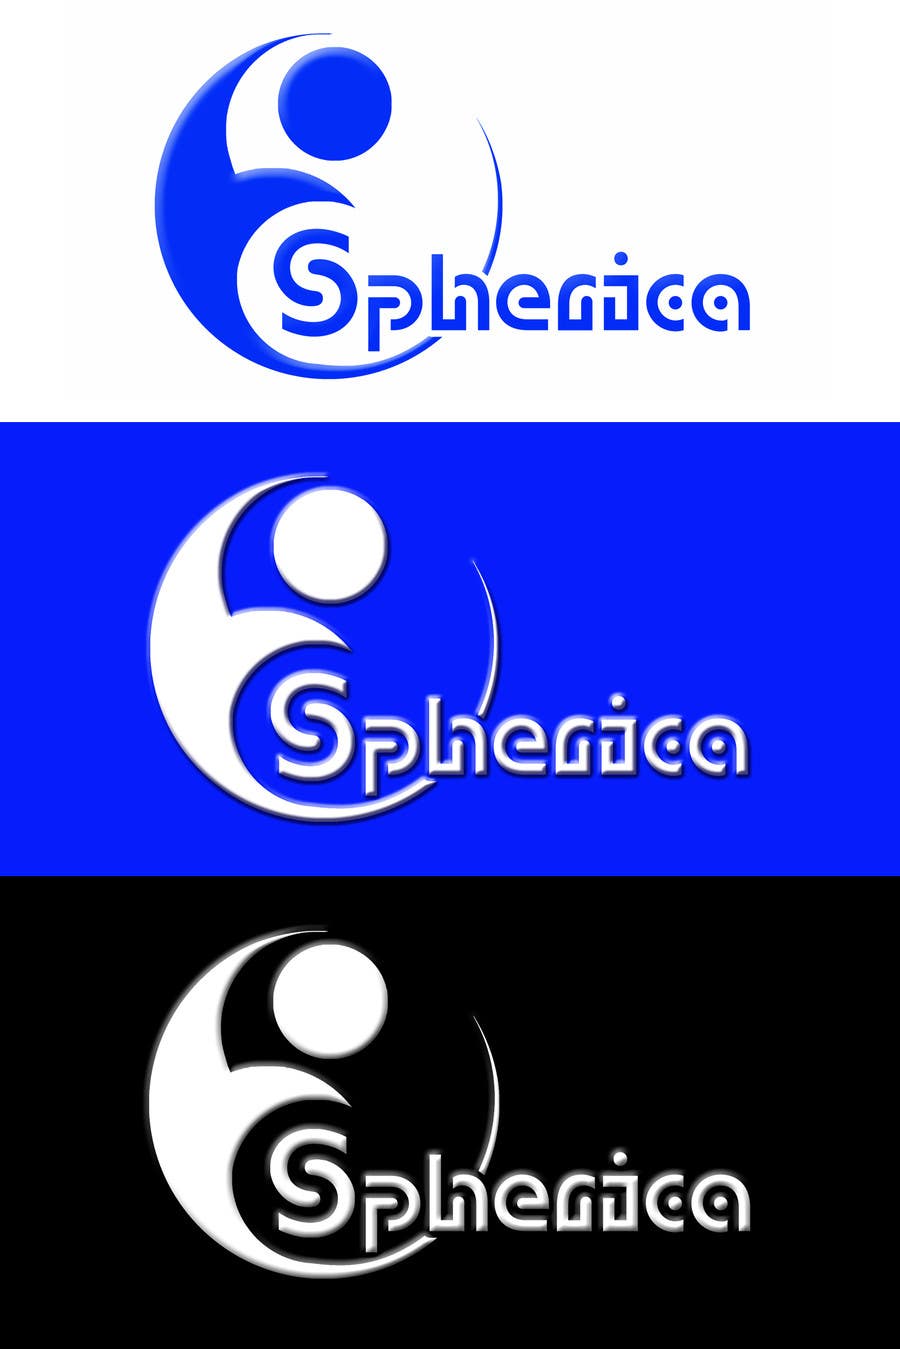 Proposta in Concorso #551 per                                                 Design a Logo for "Spherica" (Human Resources & Technology Company)
                                            